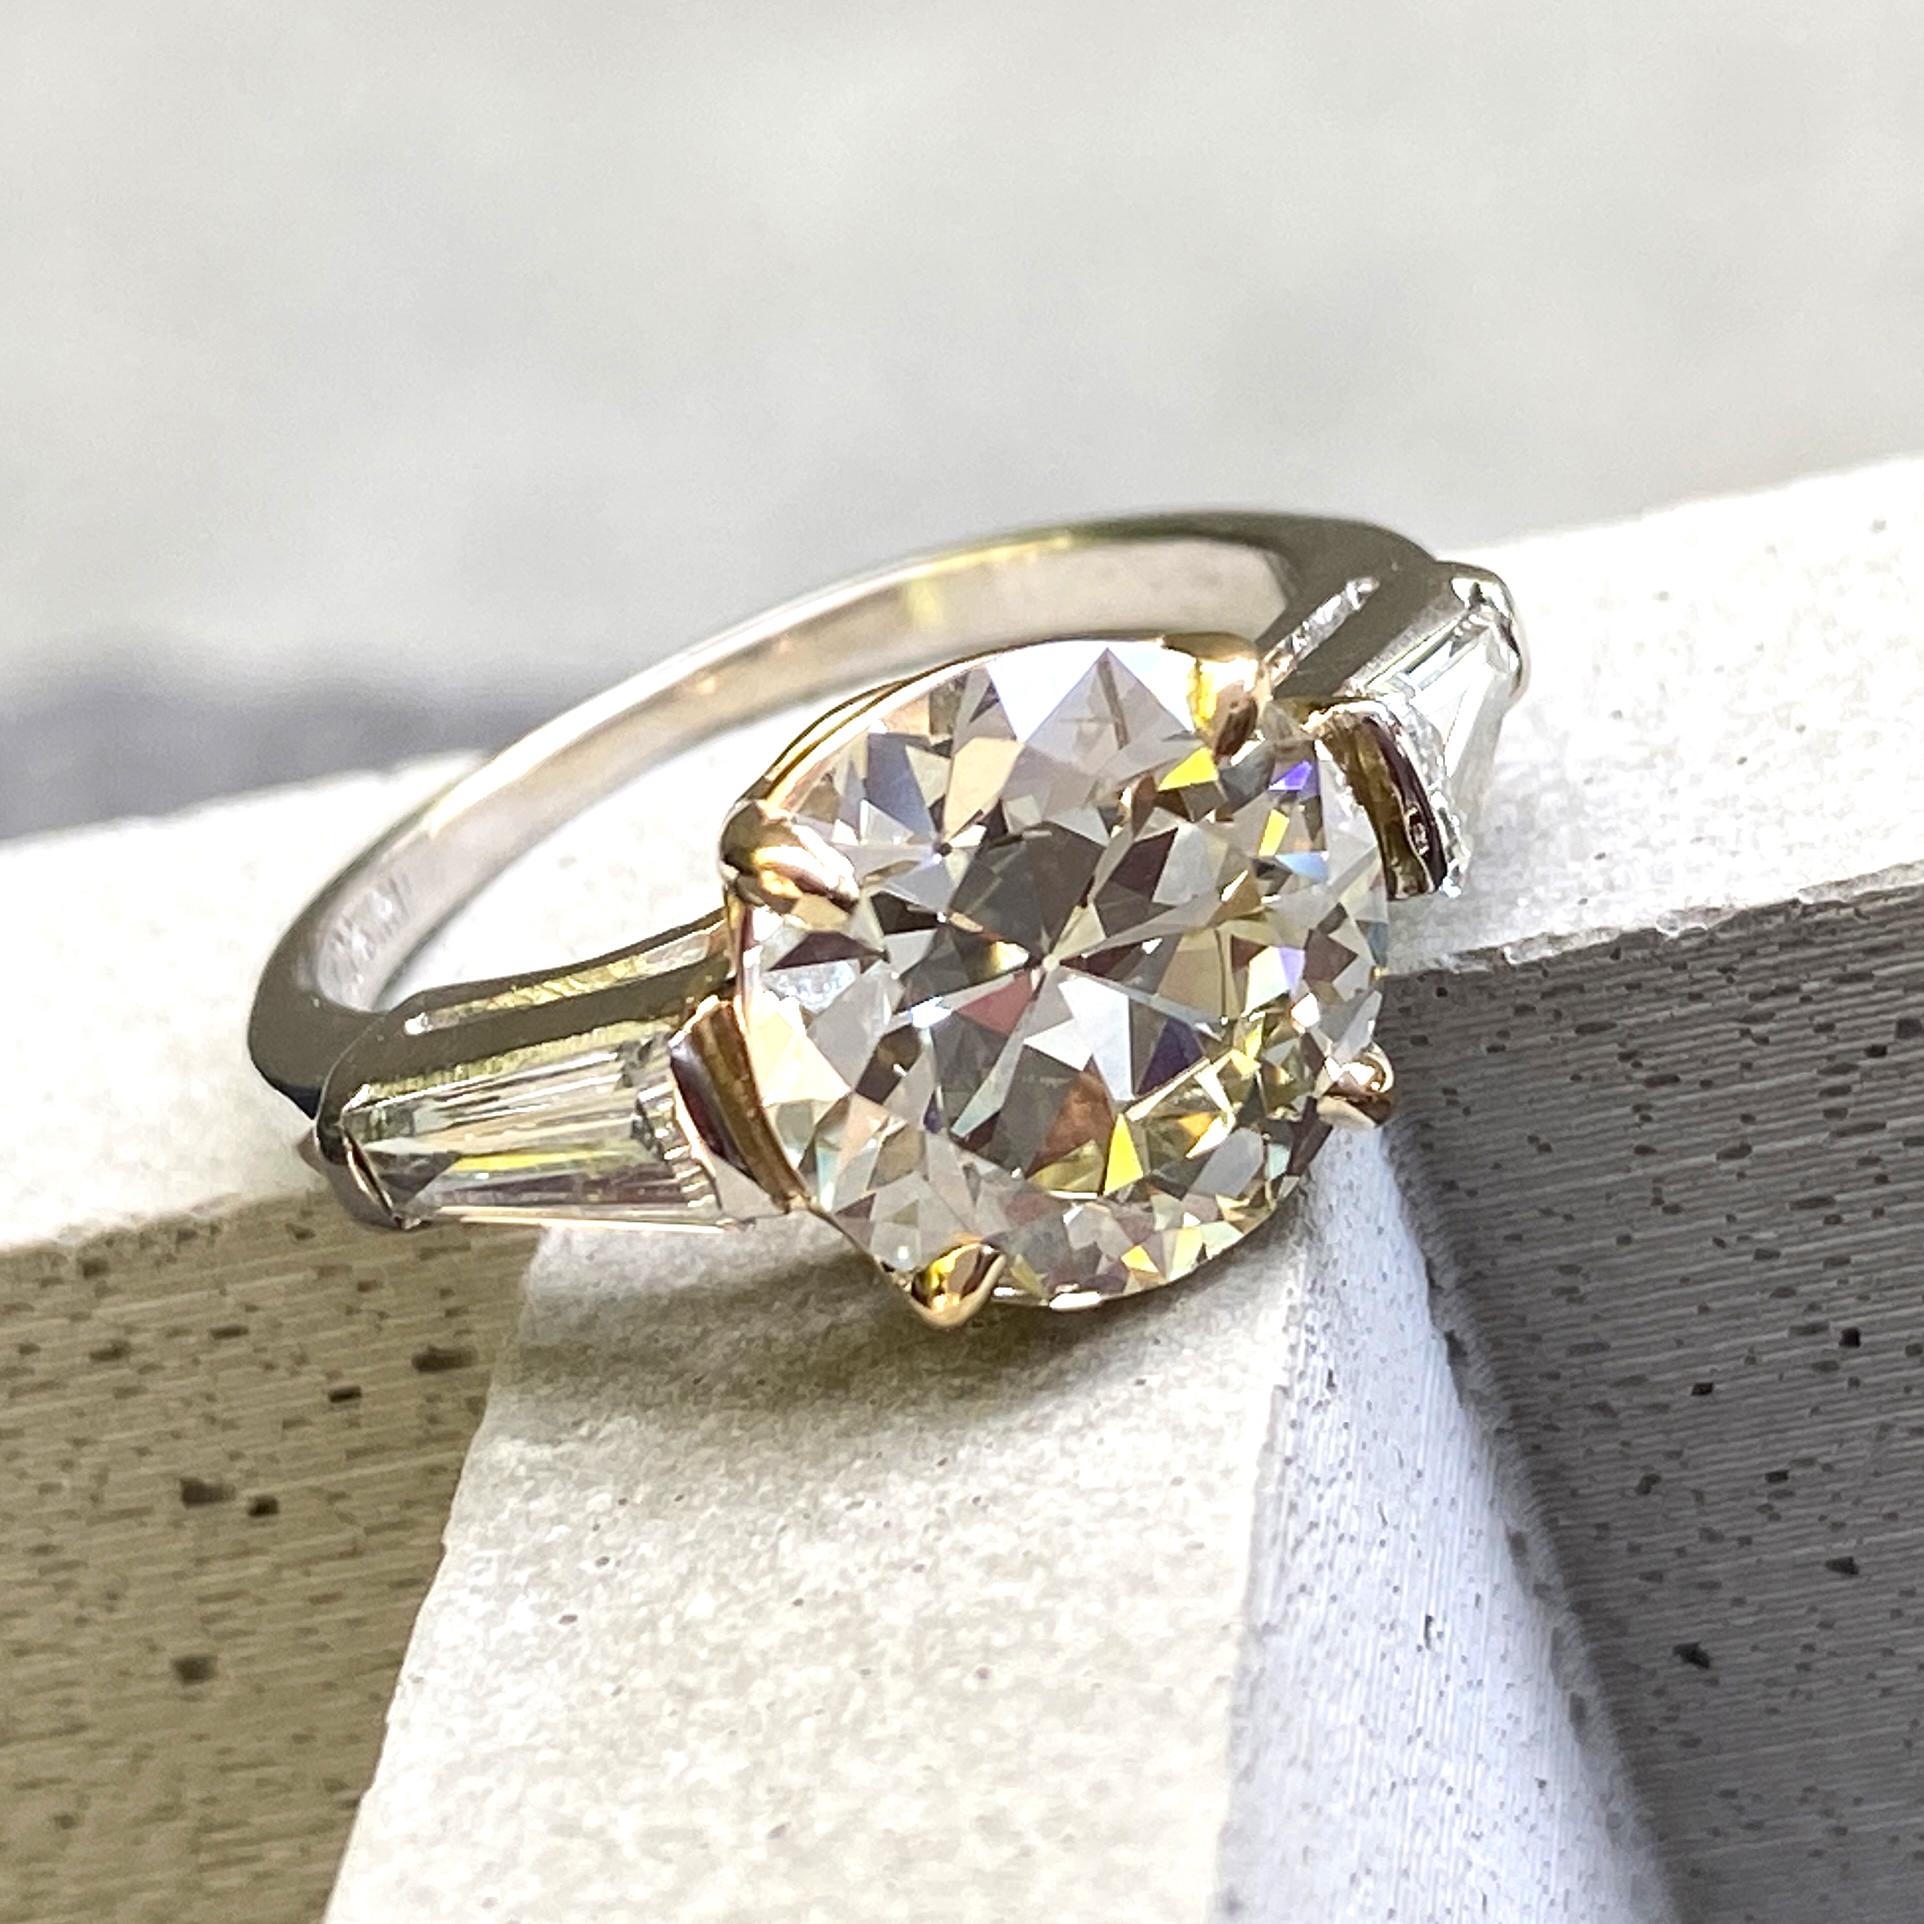 Women's or Men's Certified 3.16 Carat Transitional Cut Diamond in Platinum & Gold 3-Stone Ring